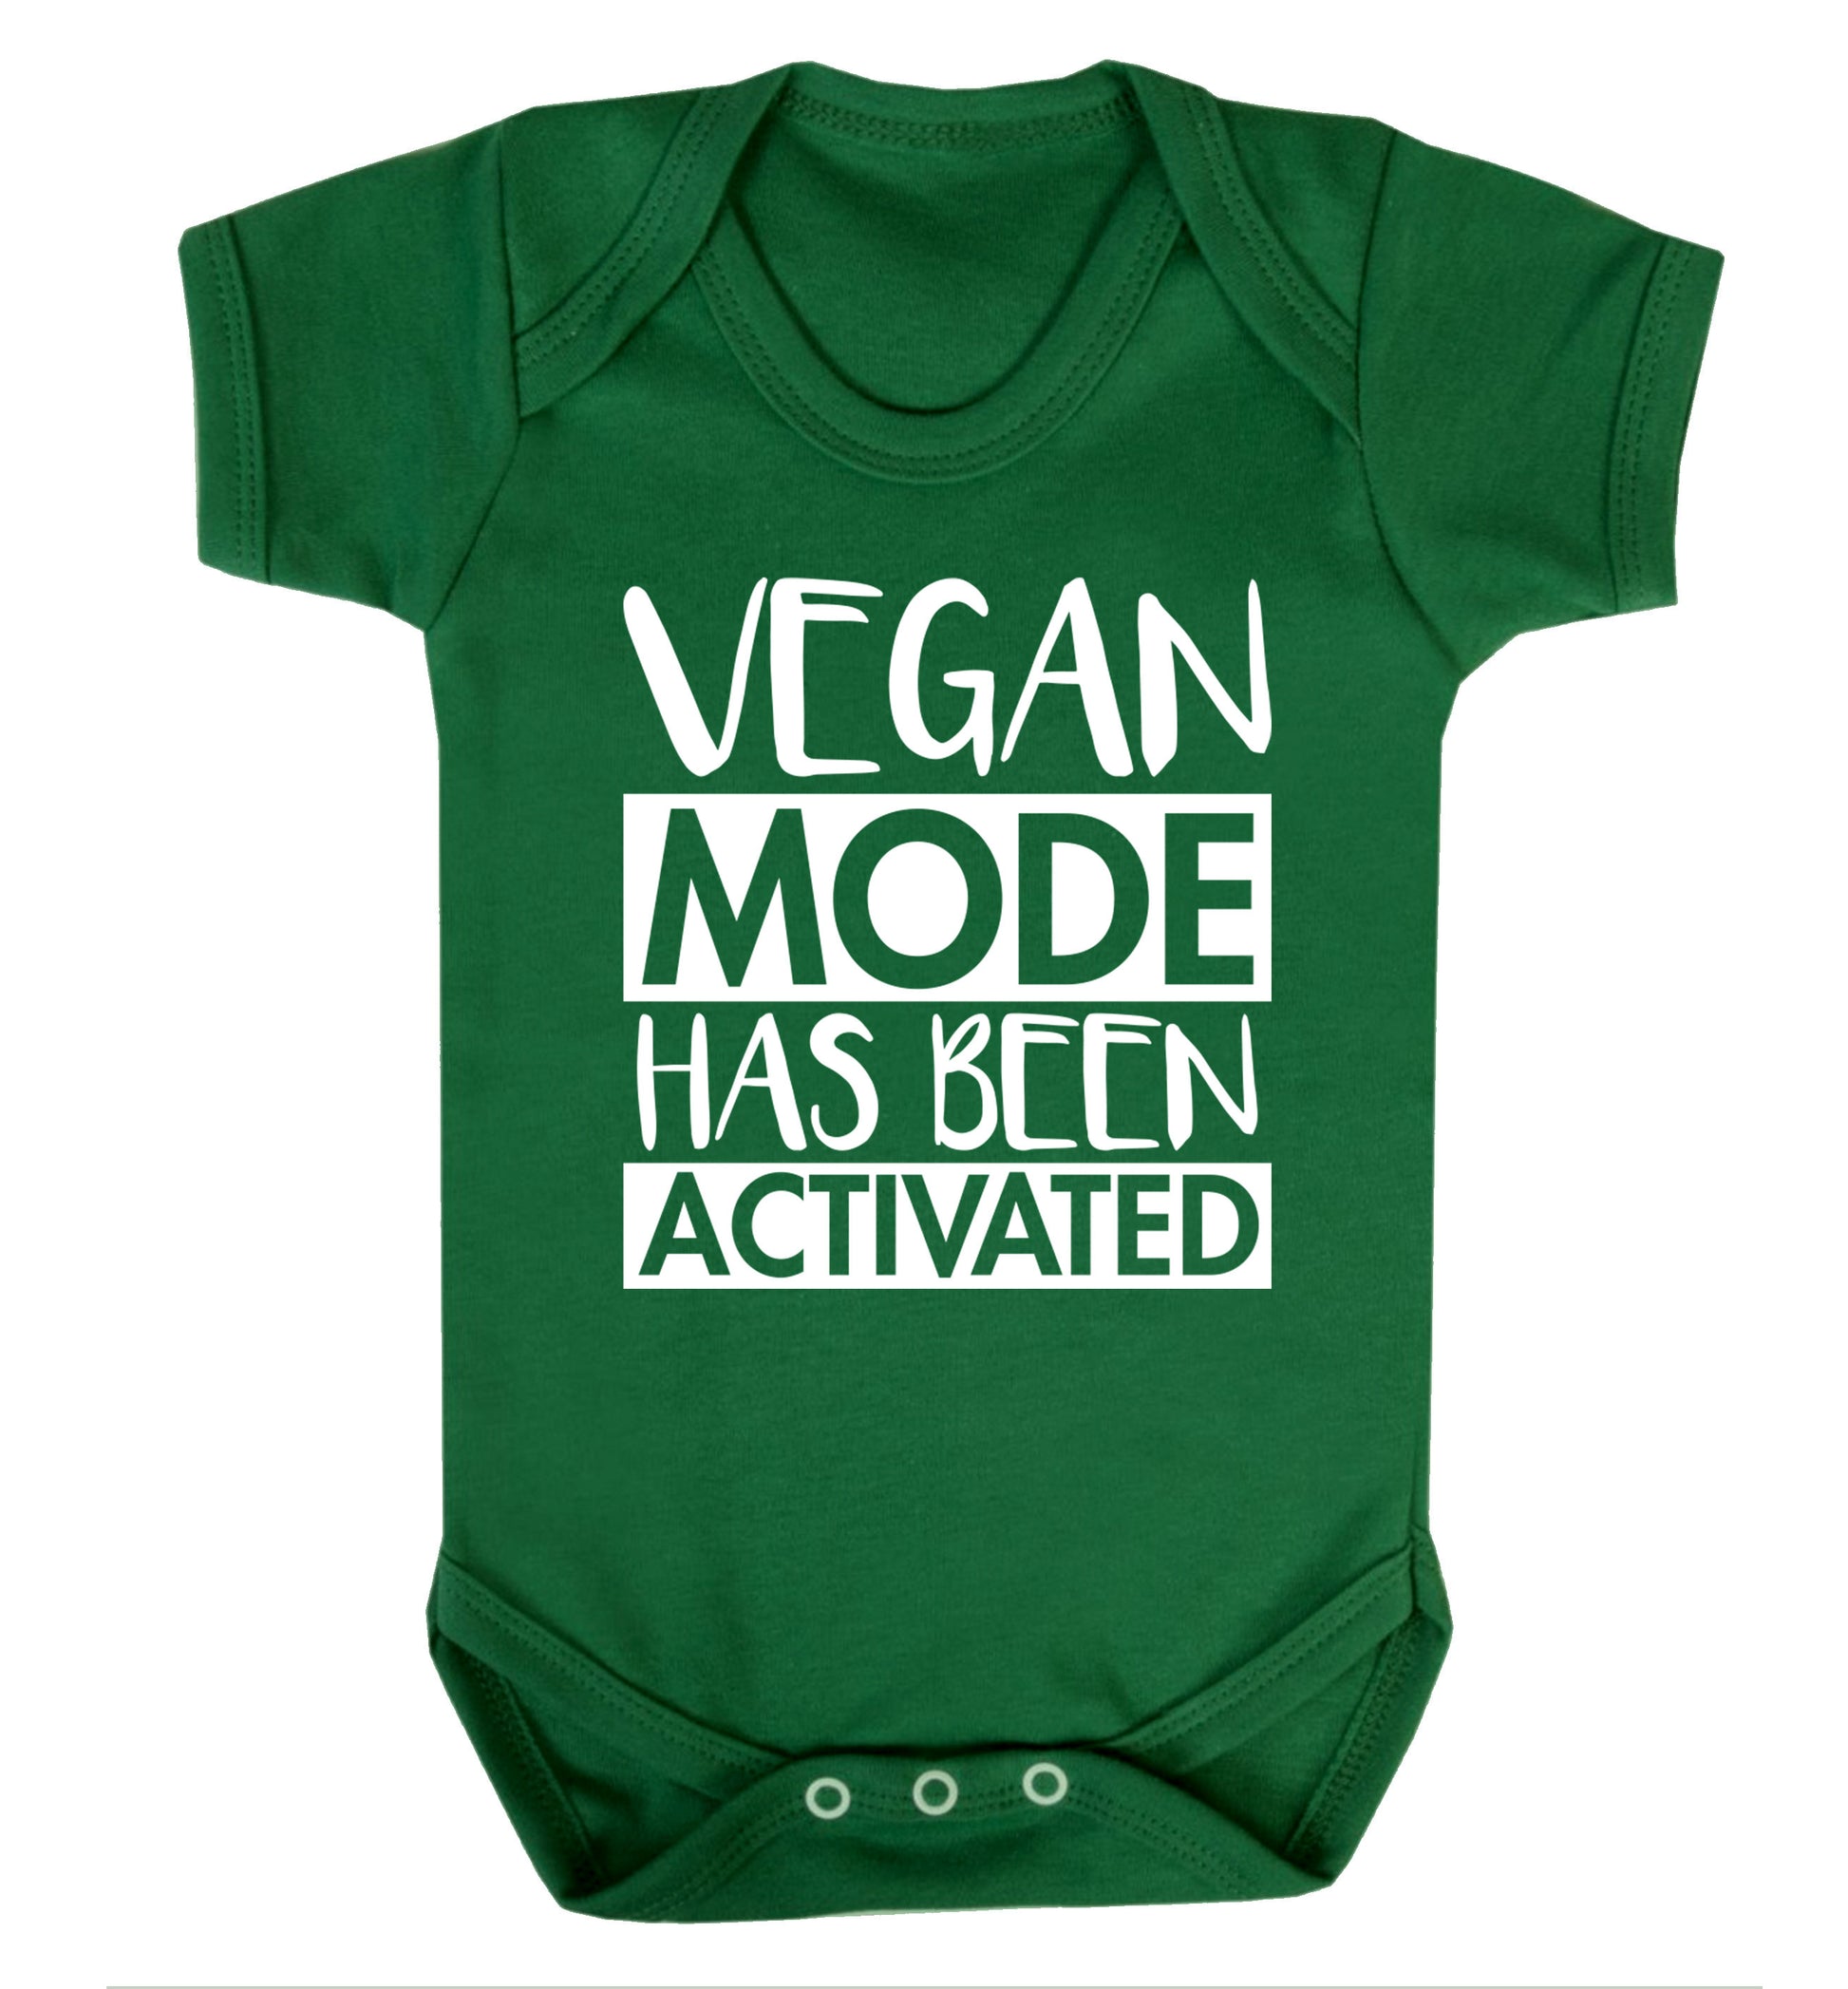 Vegan mode activated Baby Vest green 18-24 months